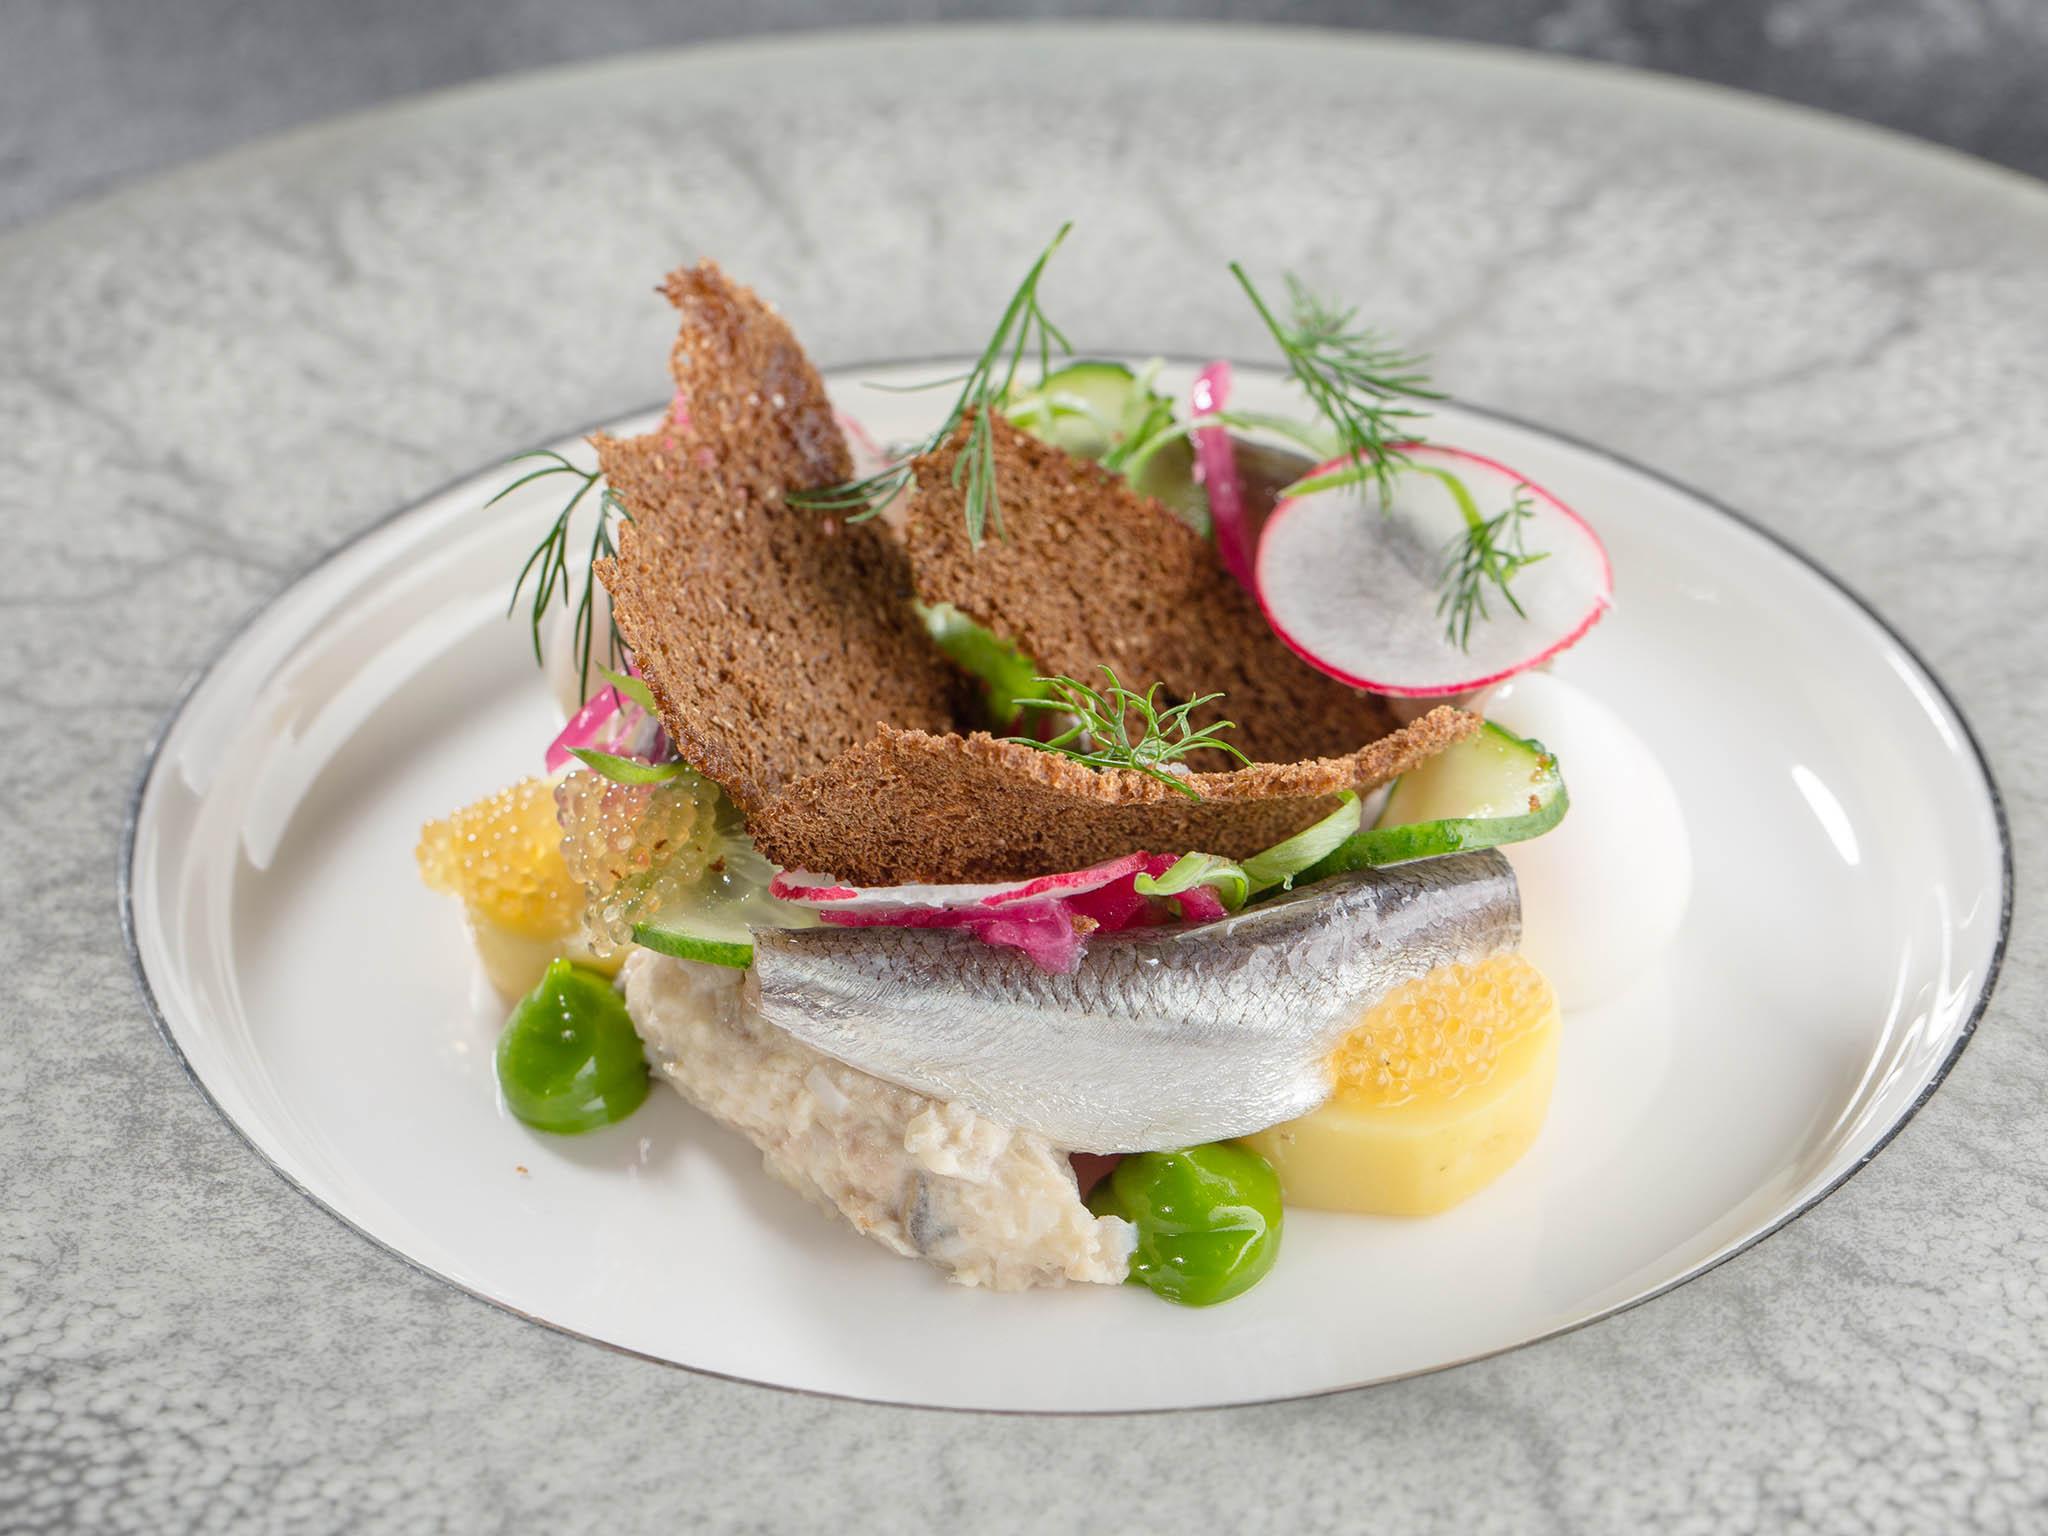 &#13;
Vorschmack with herring, pike caviar and rye bread at Savva restaurant &#13;